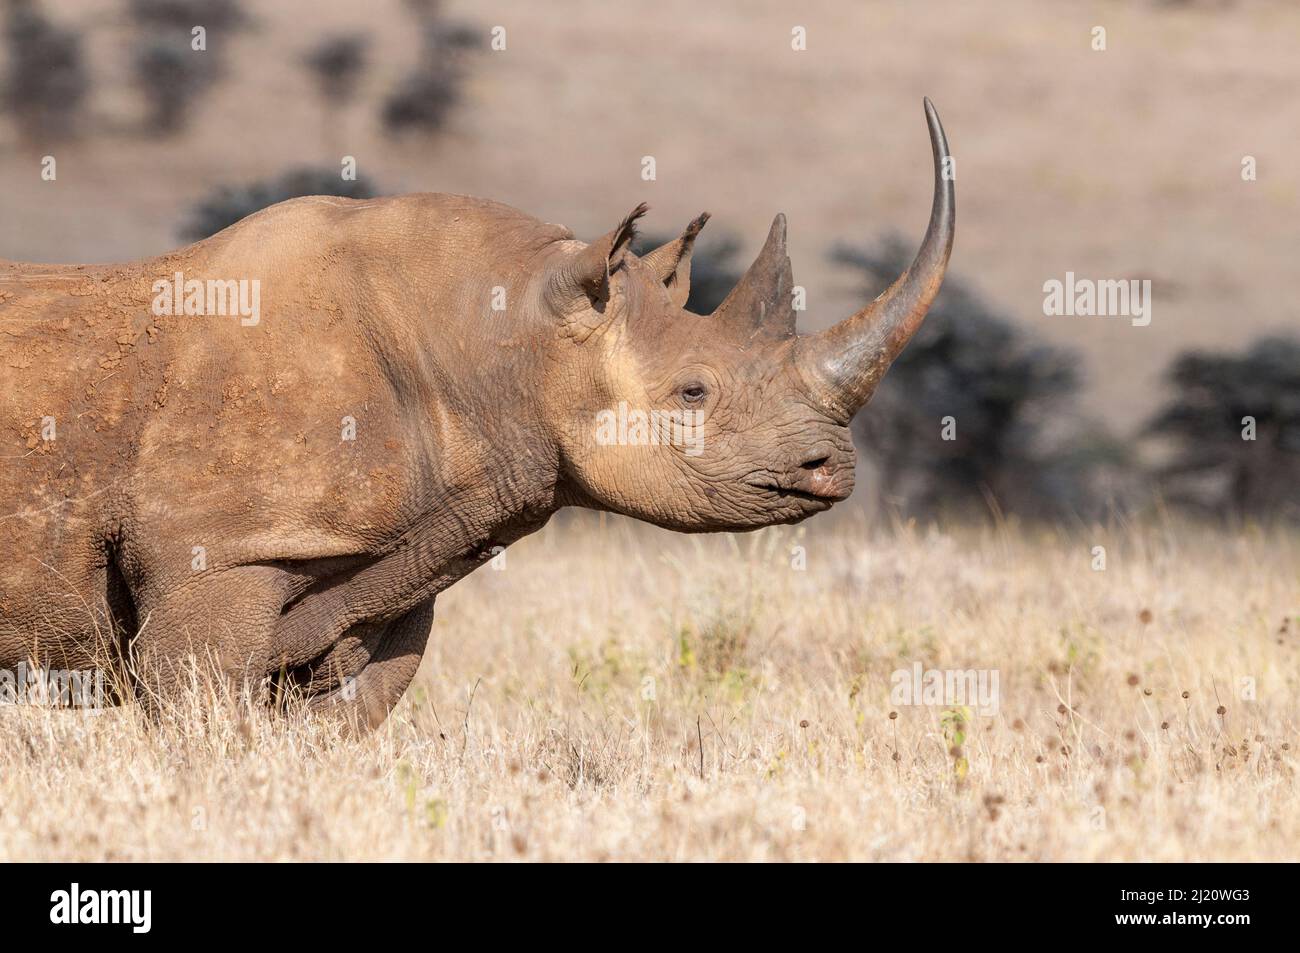 Black rhino (Diceros bicornis) with very long horn, Lewa Wildlife Conservancy, Laikipia, Kenya. October. Stock Photo